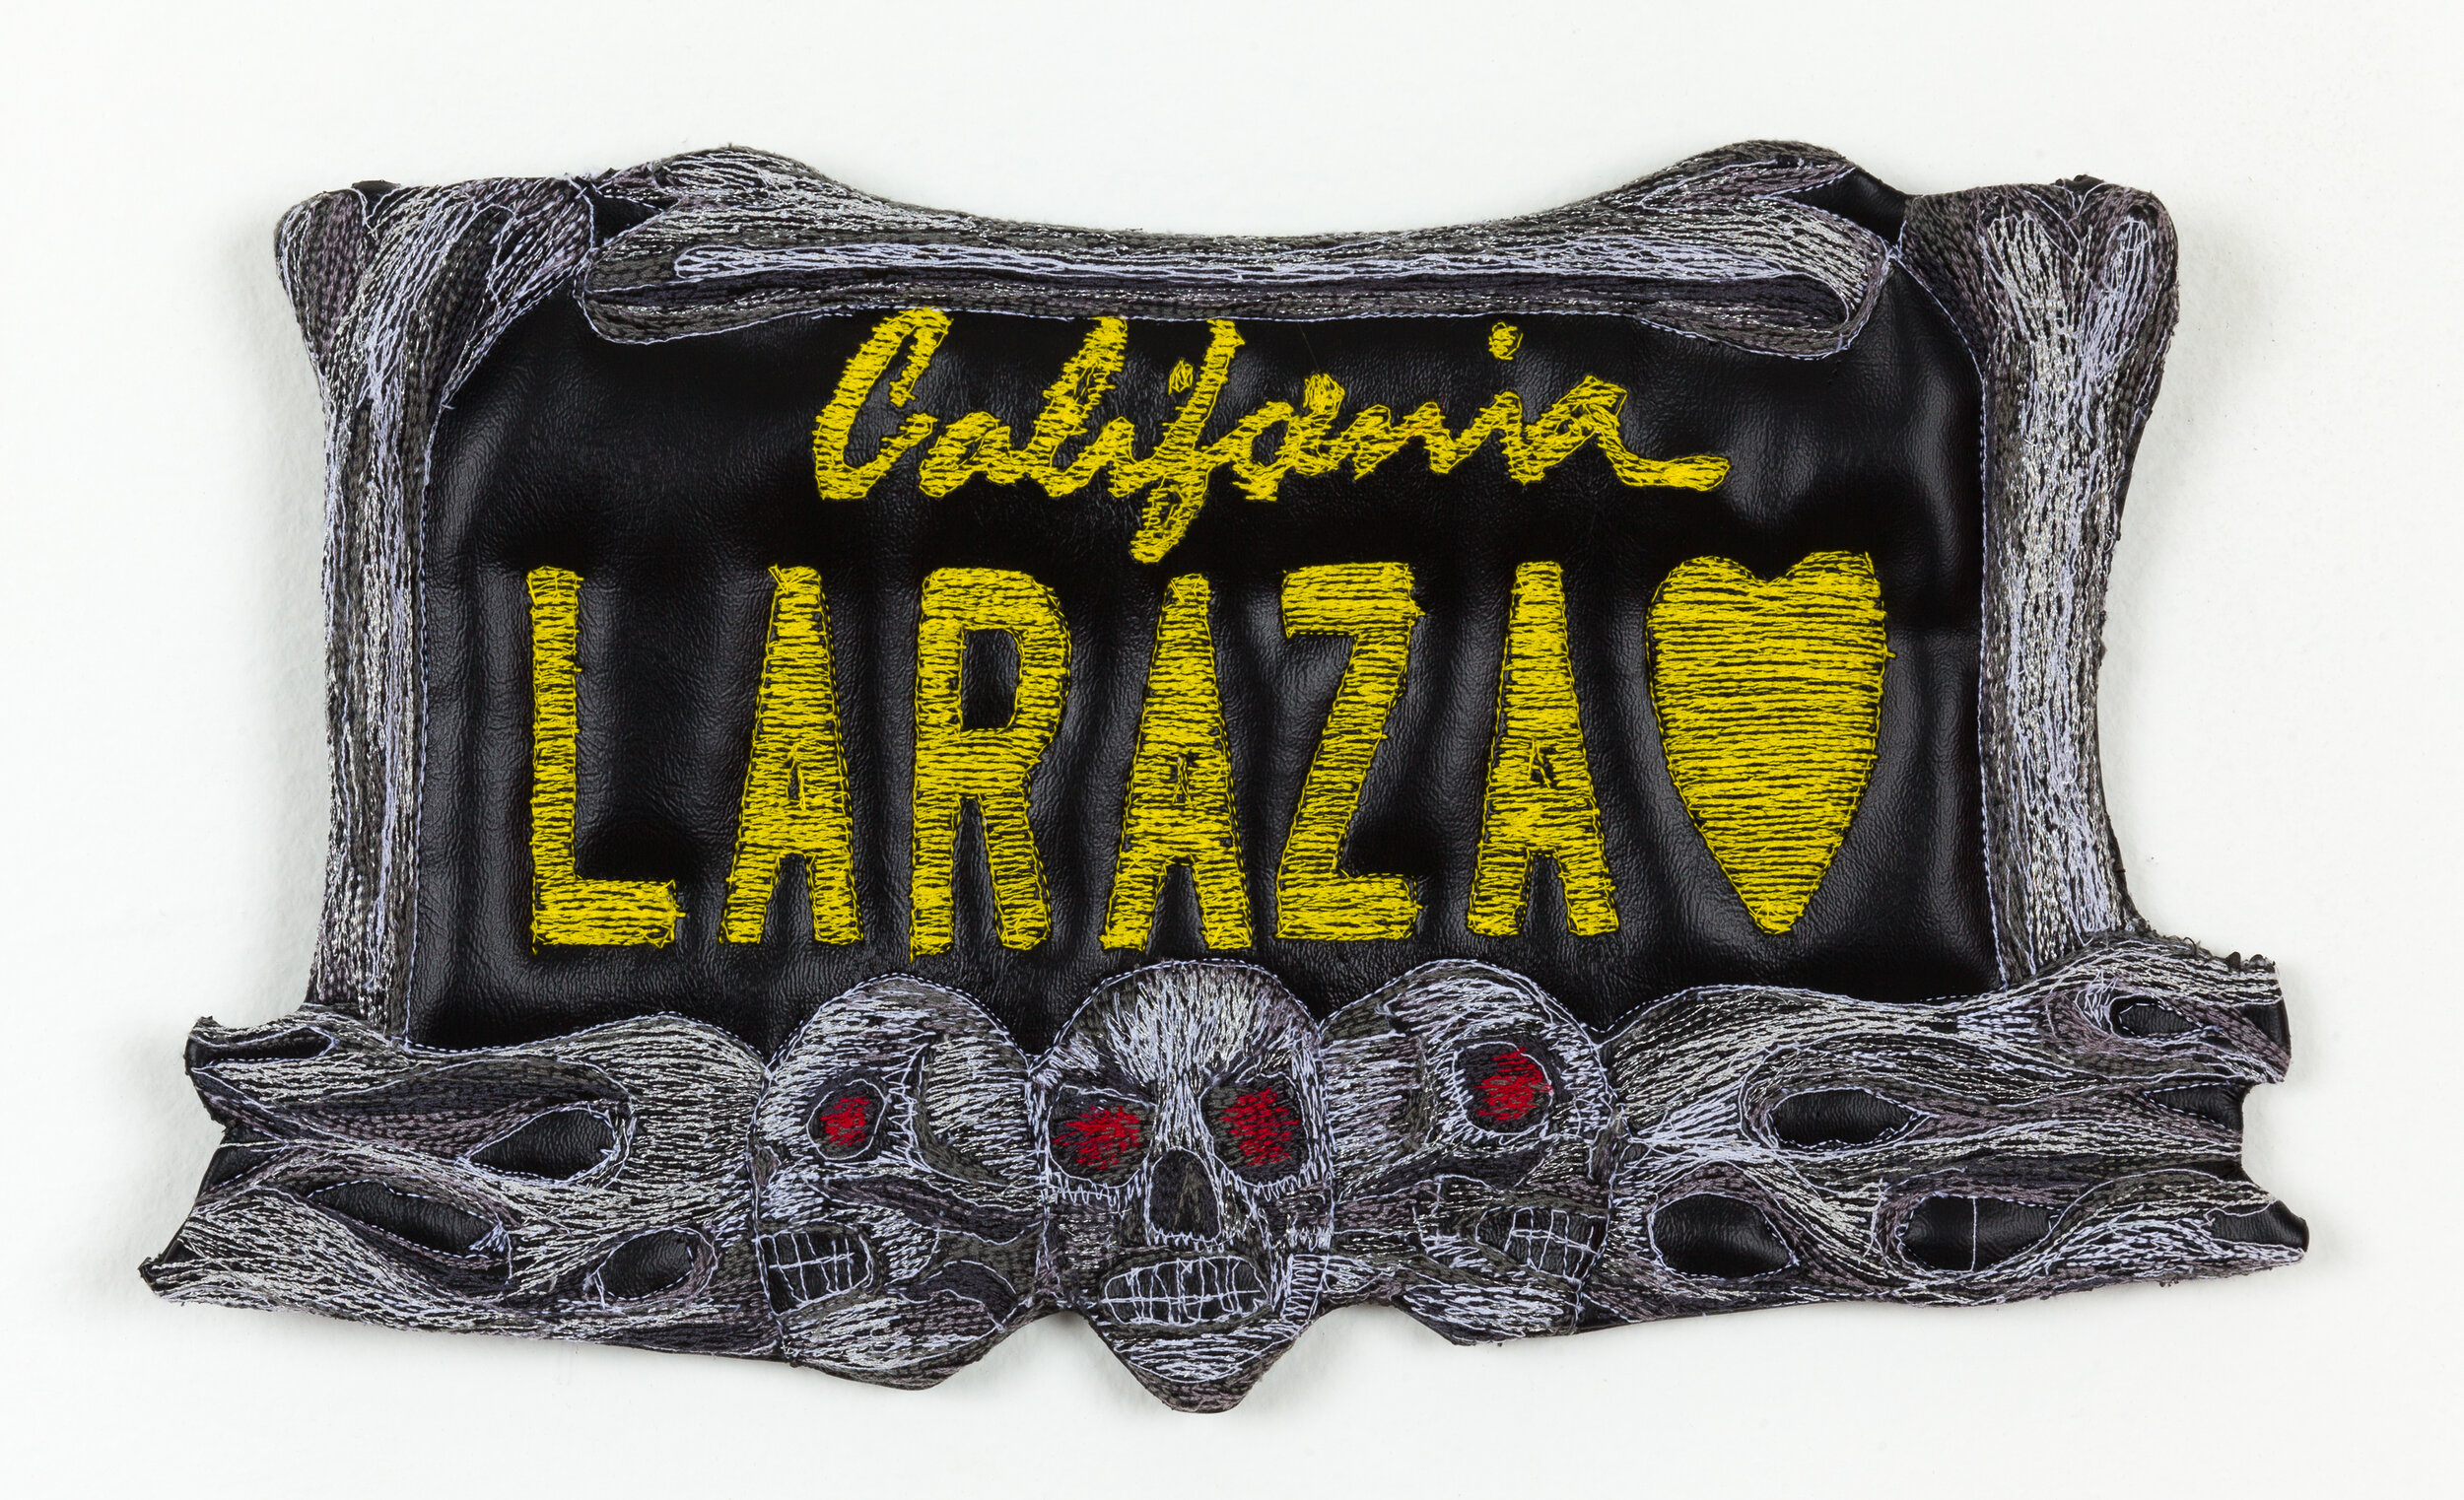  LA Raza, 2020  faux leather, thread, polyurethane foam, hardware  8x12 inches   